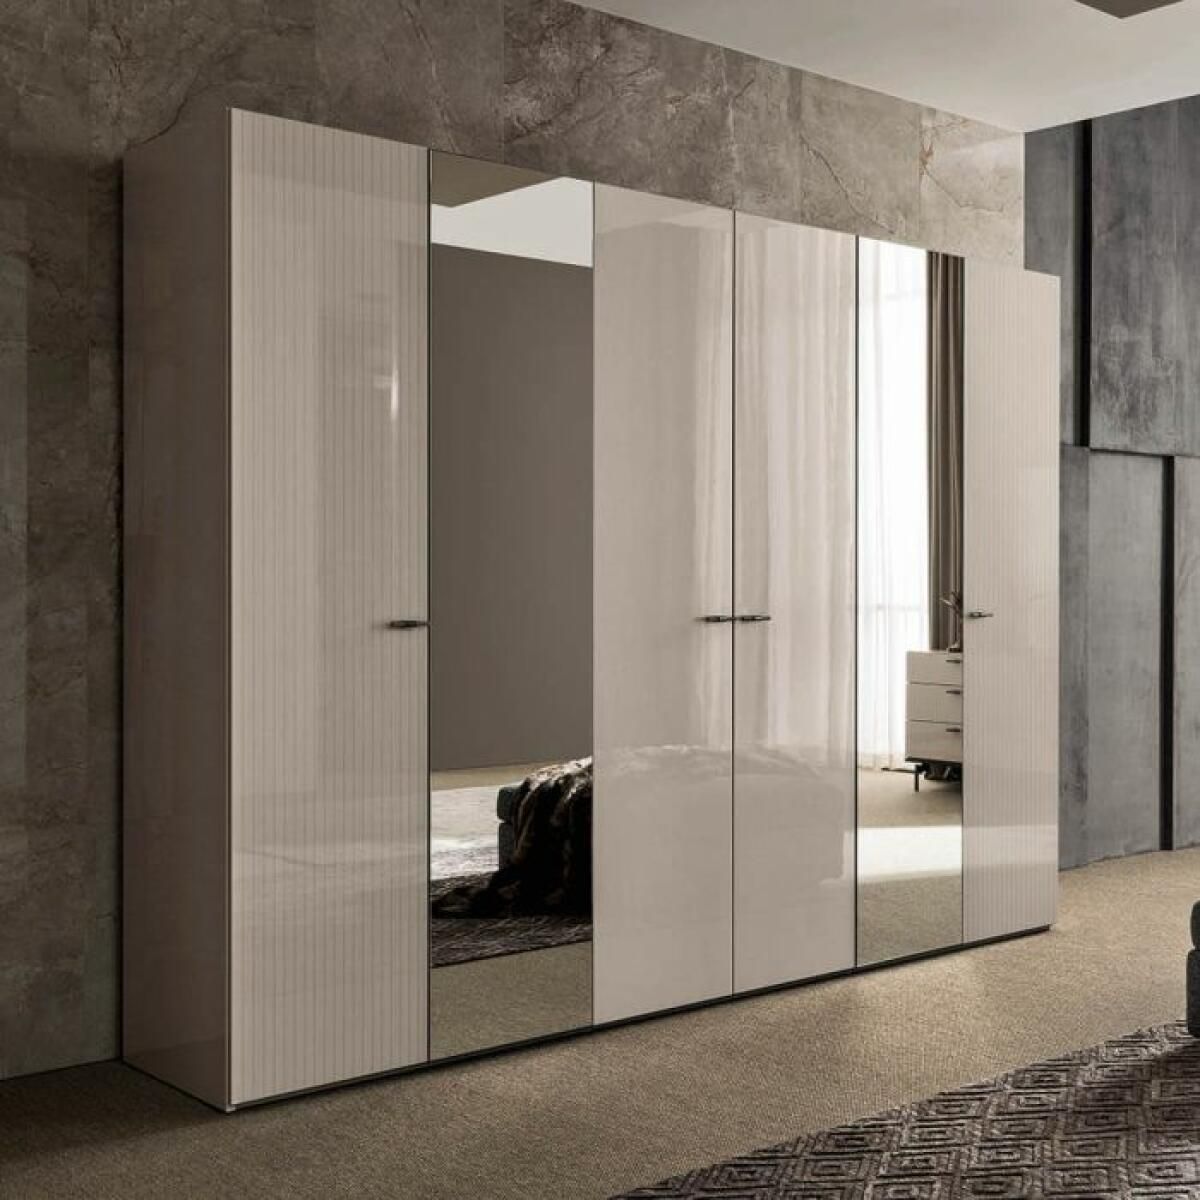 Claire 6 Door Mirrored Wardrobe – Bova Contemporary Furniture – Dallas,  Texas Modern Furniture Store For 6 Door Wardrobes Bedroom Furniture (View 2 of 15)